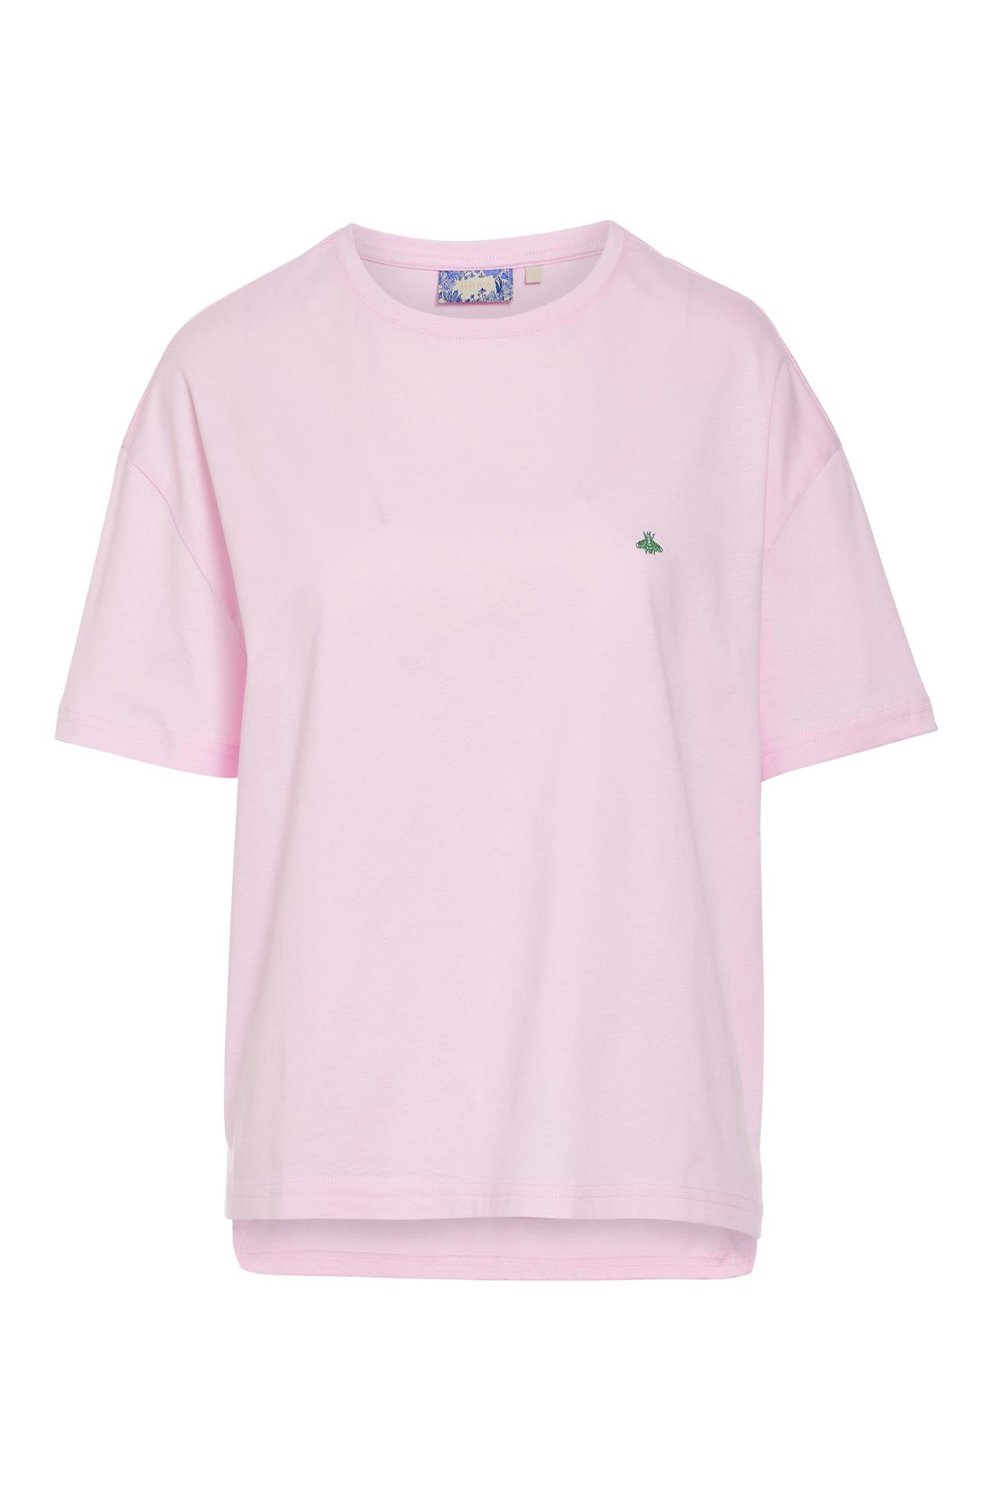 ESSENZA Colette Uni Kurzarmshirt cherry Loungewear 3 44 rosa